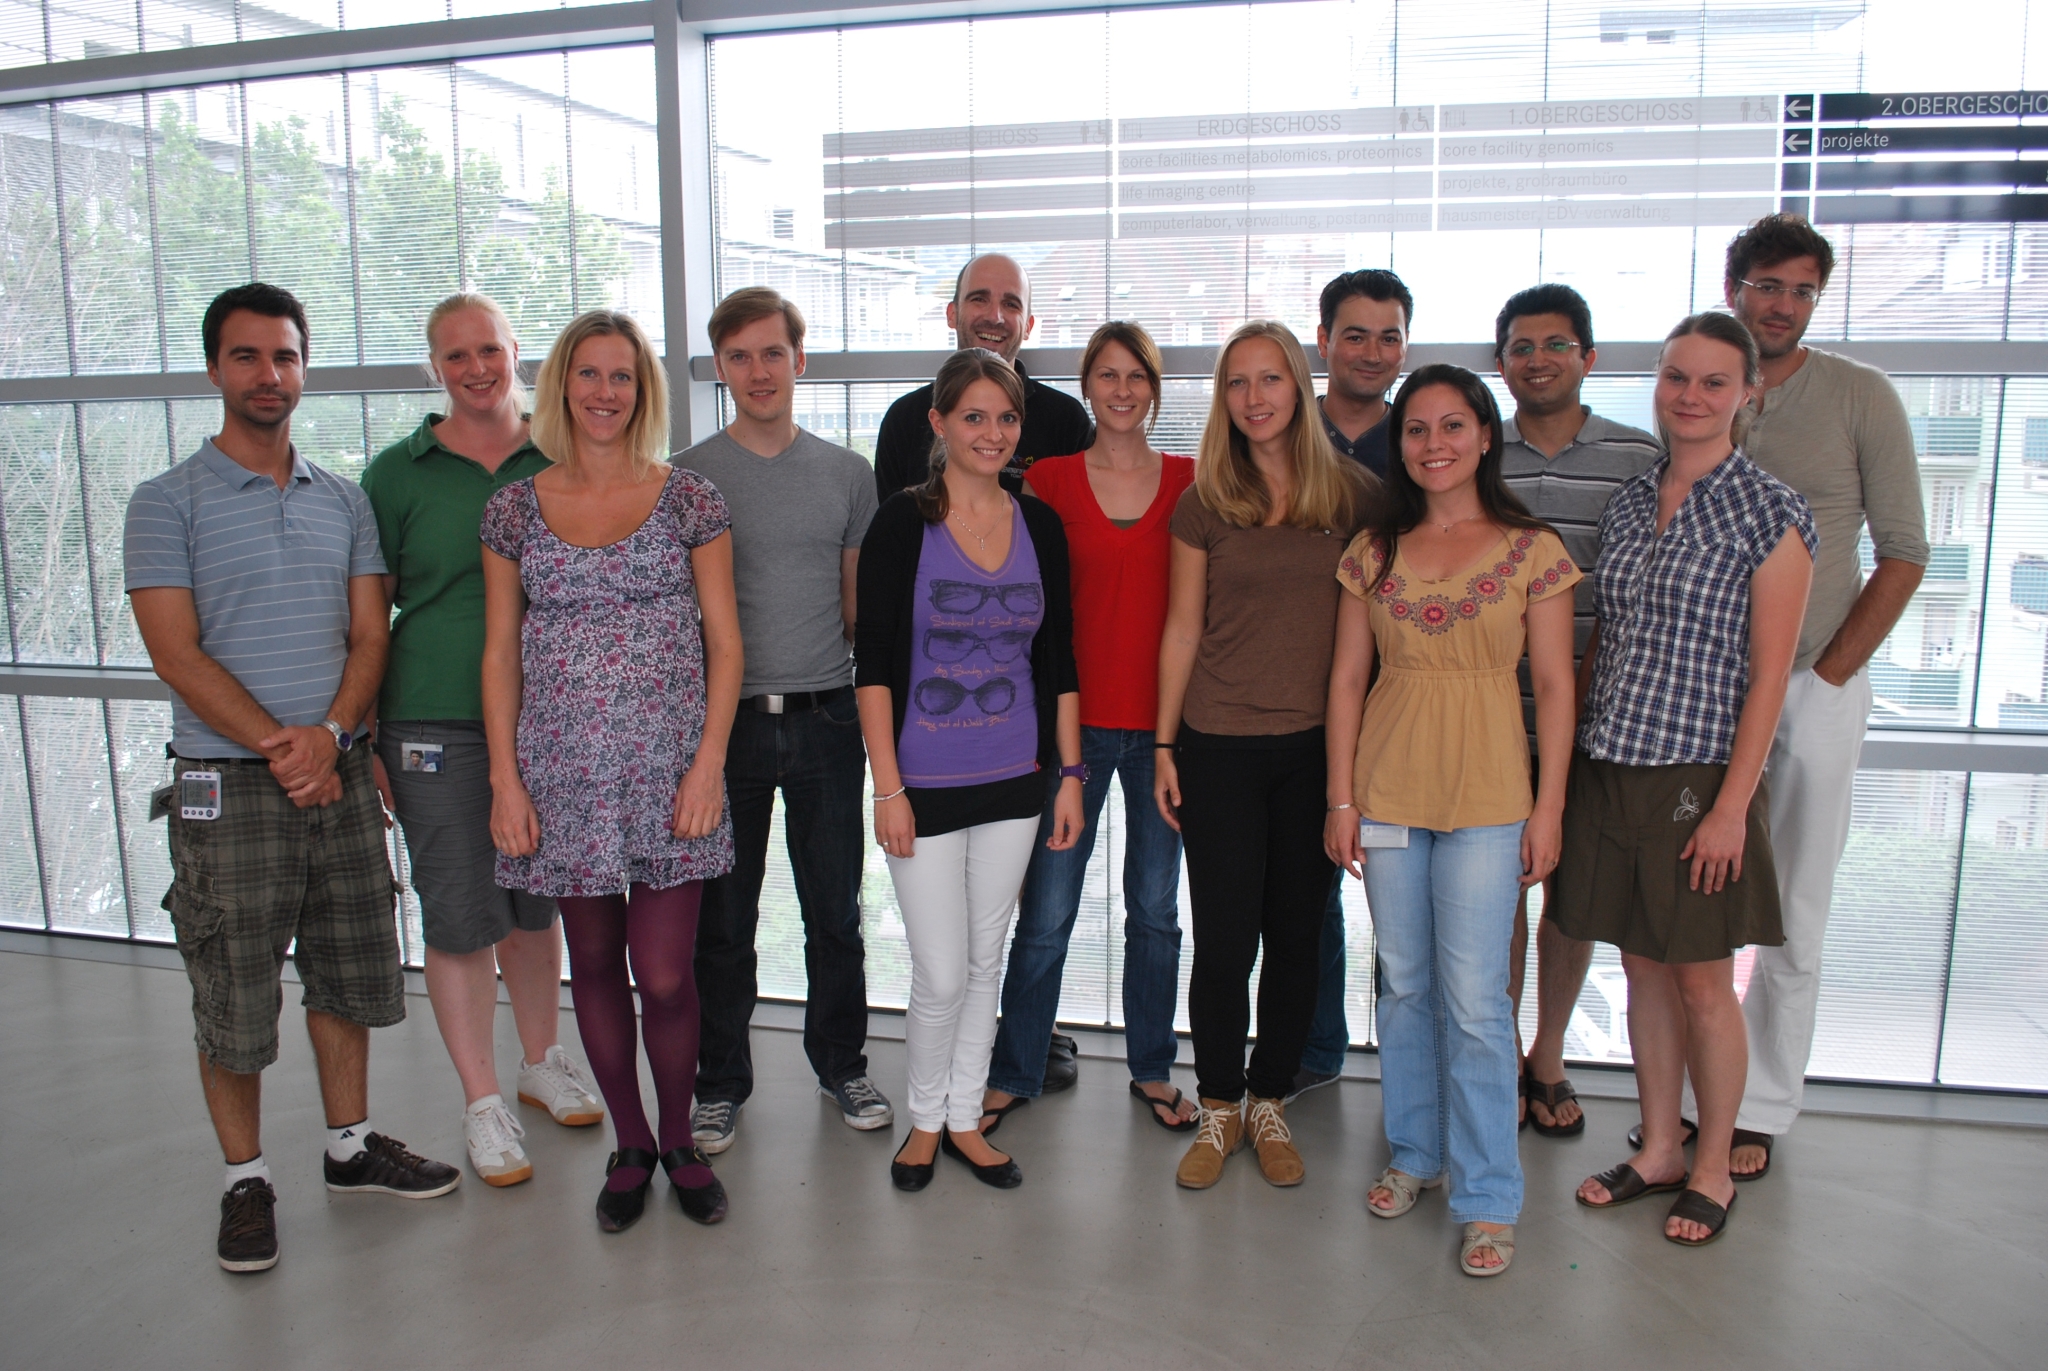 The photo shows Dr. Dengjel's team of researchers.